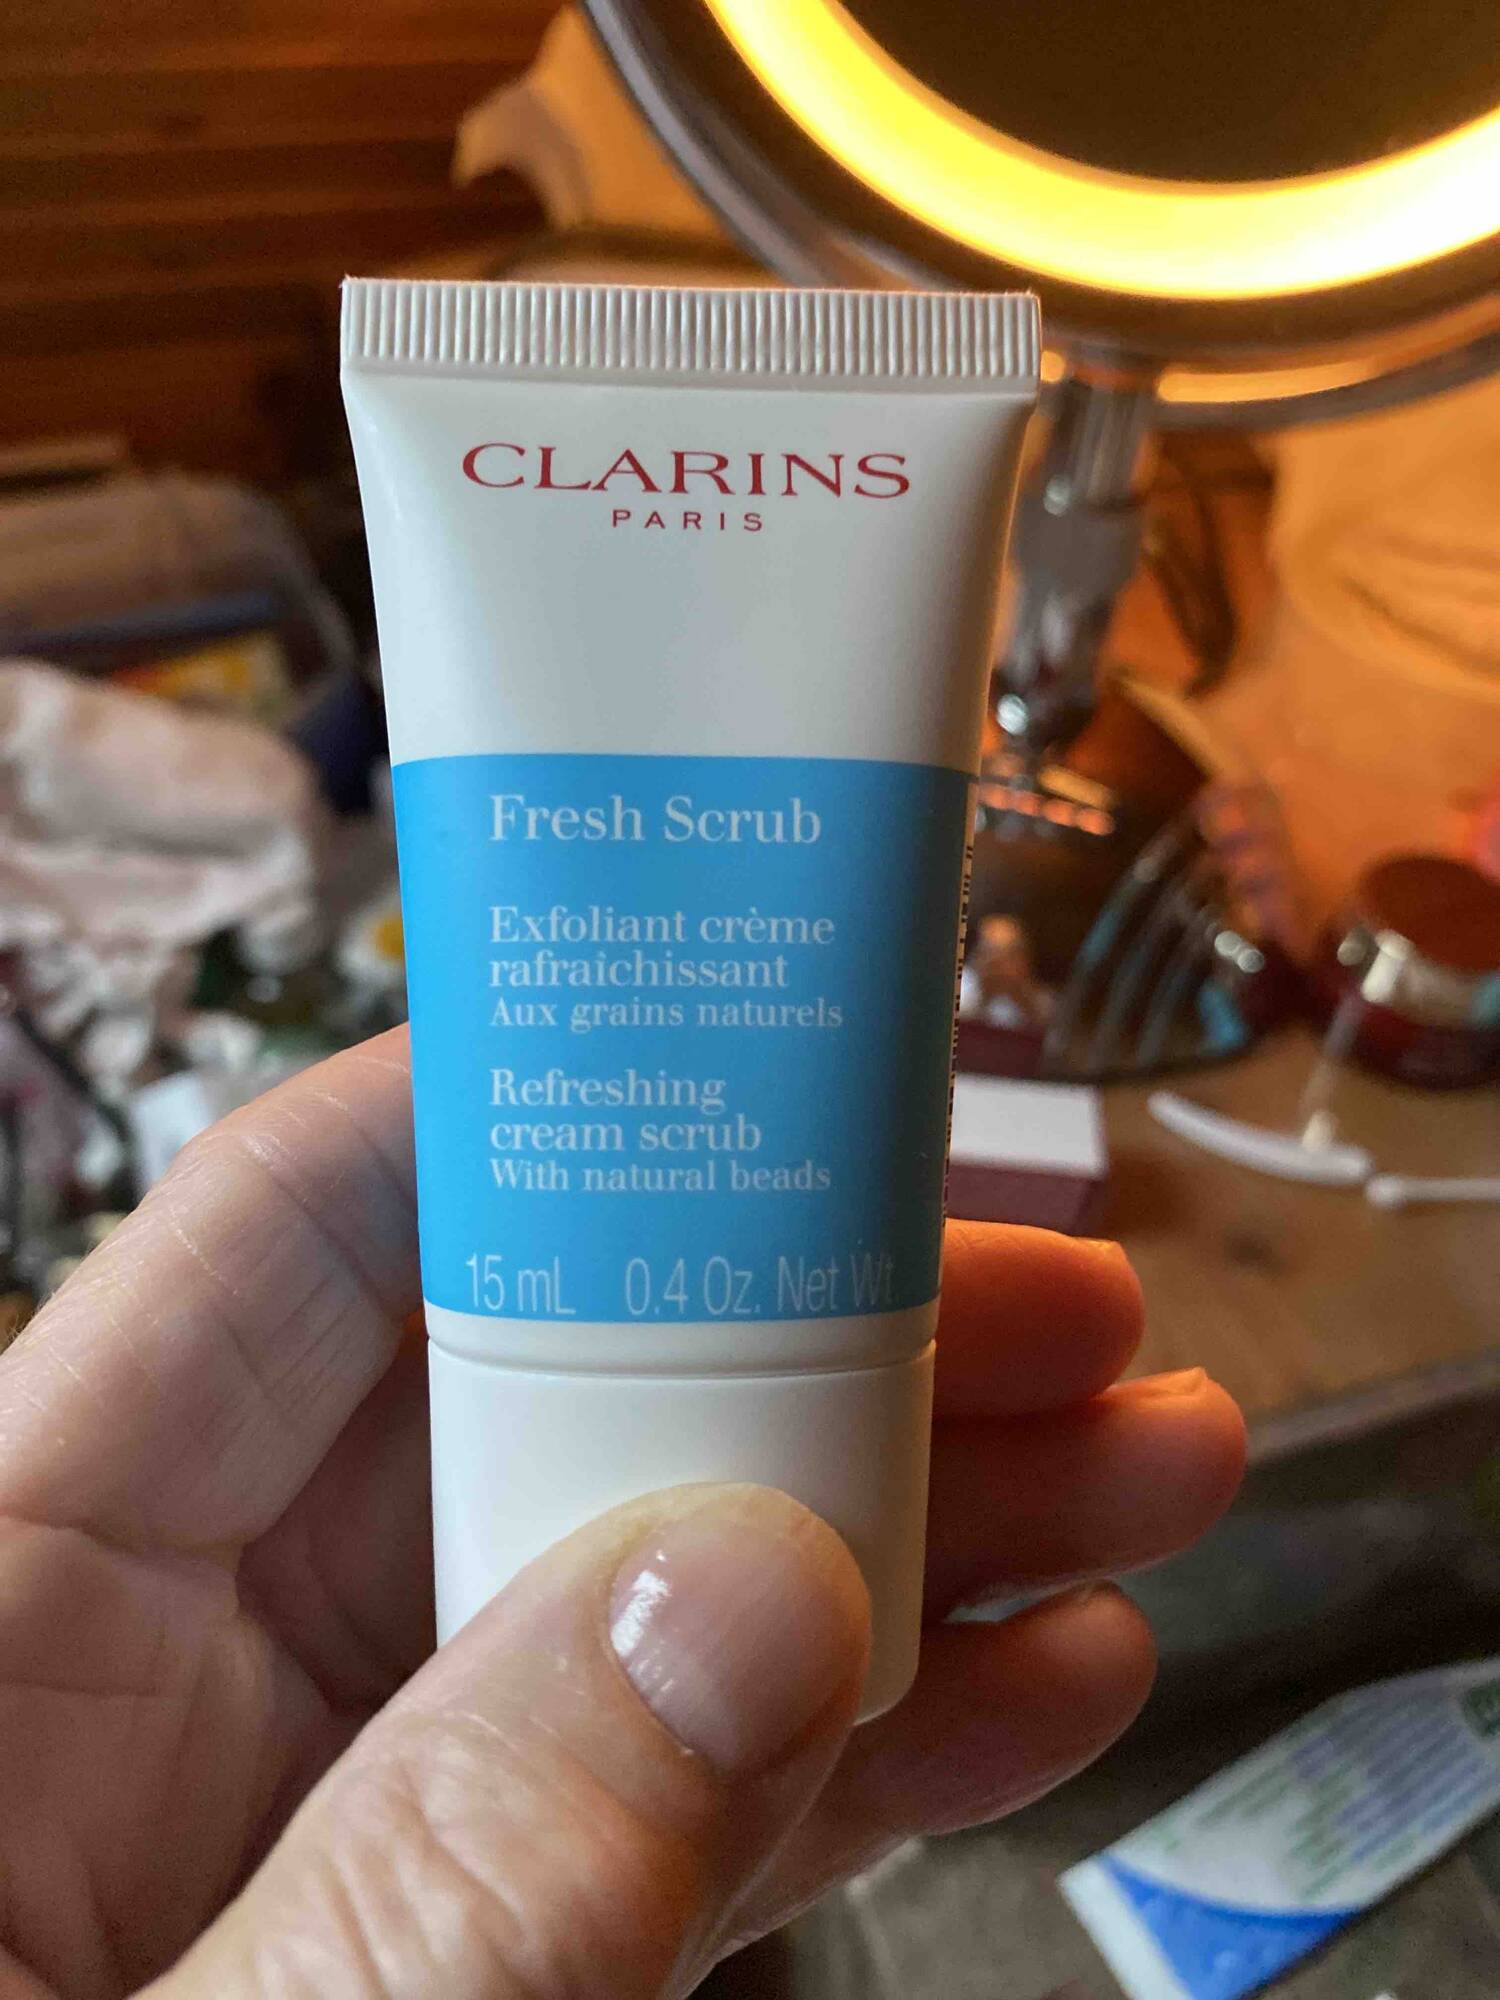 CLARINS - Exfoliant crème rafraîchissant